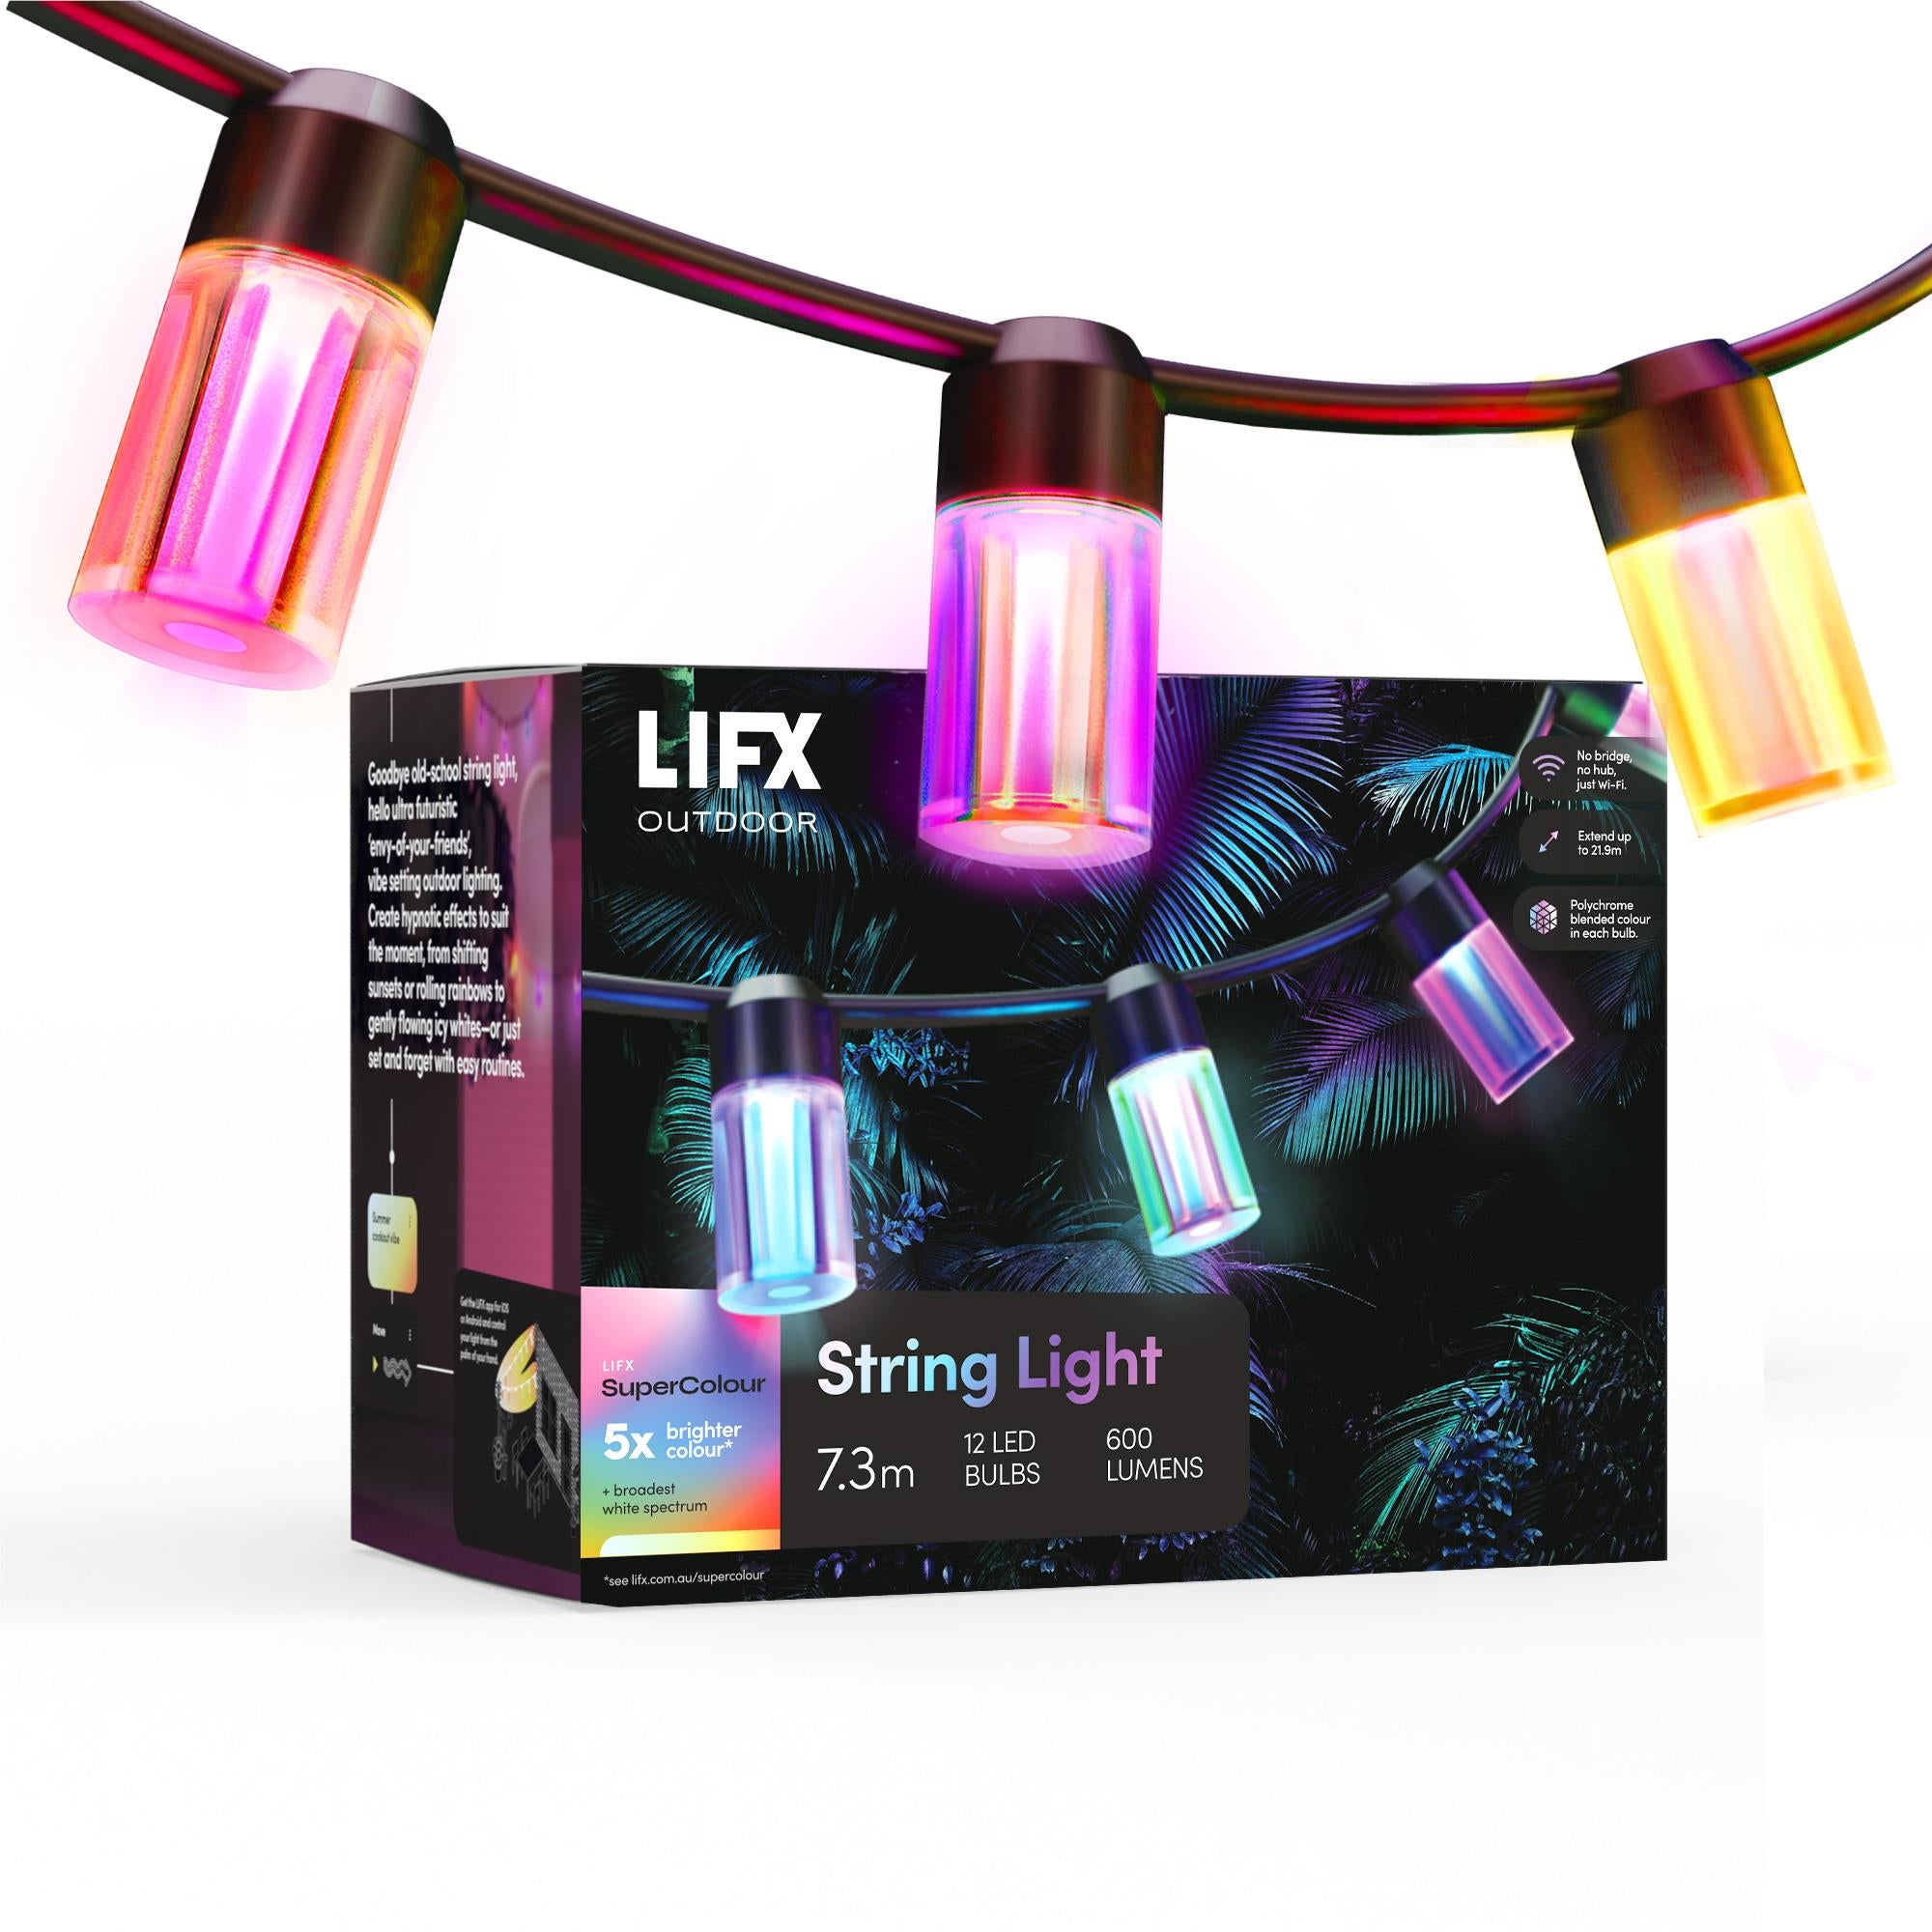 lifx string light rgbw (7.3m)